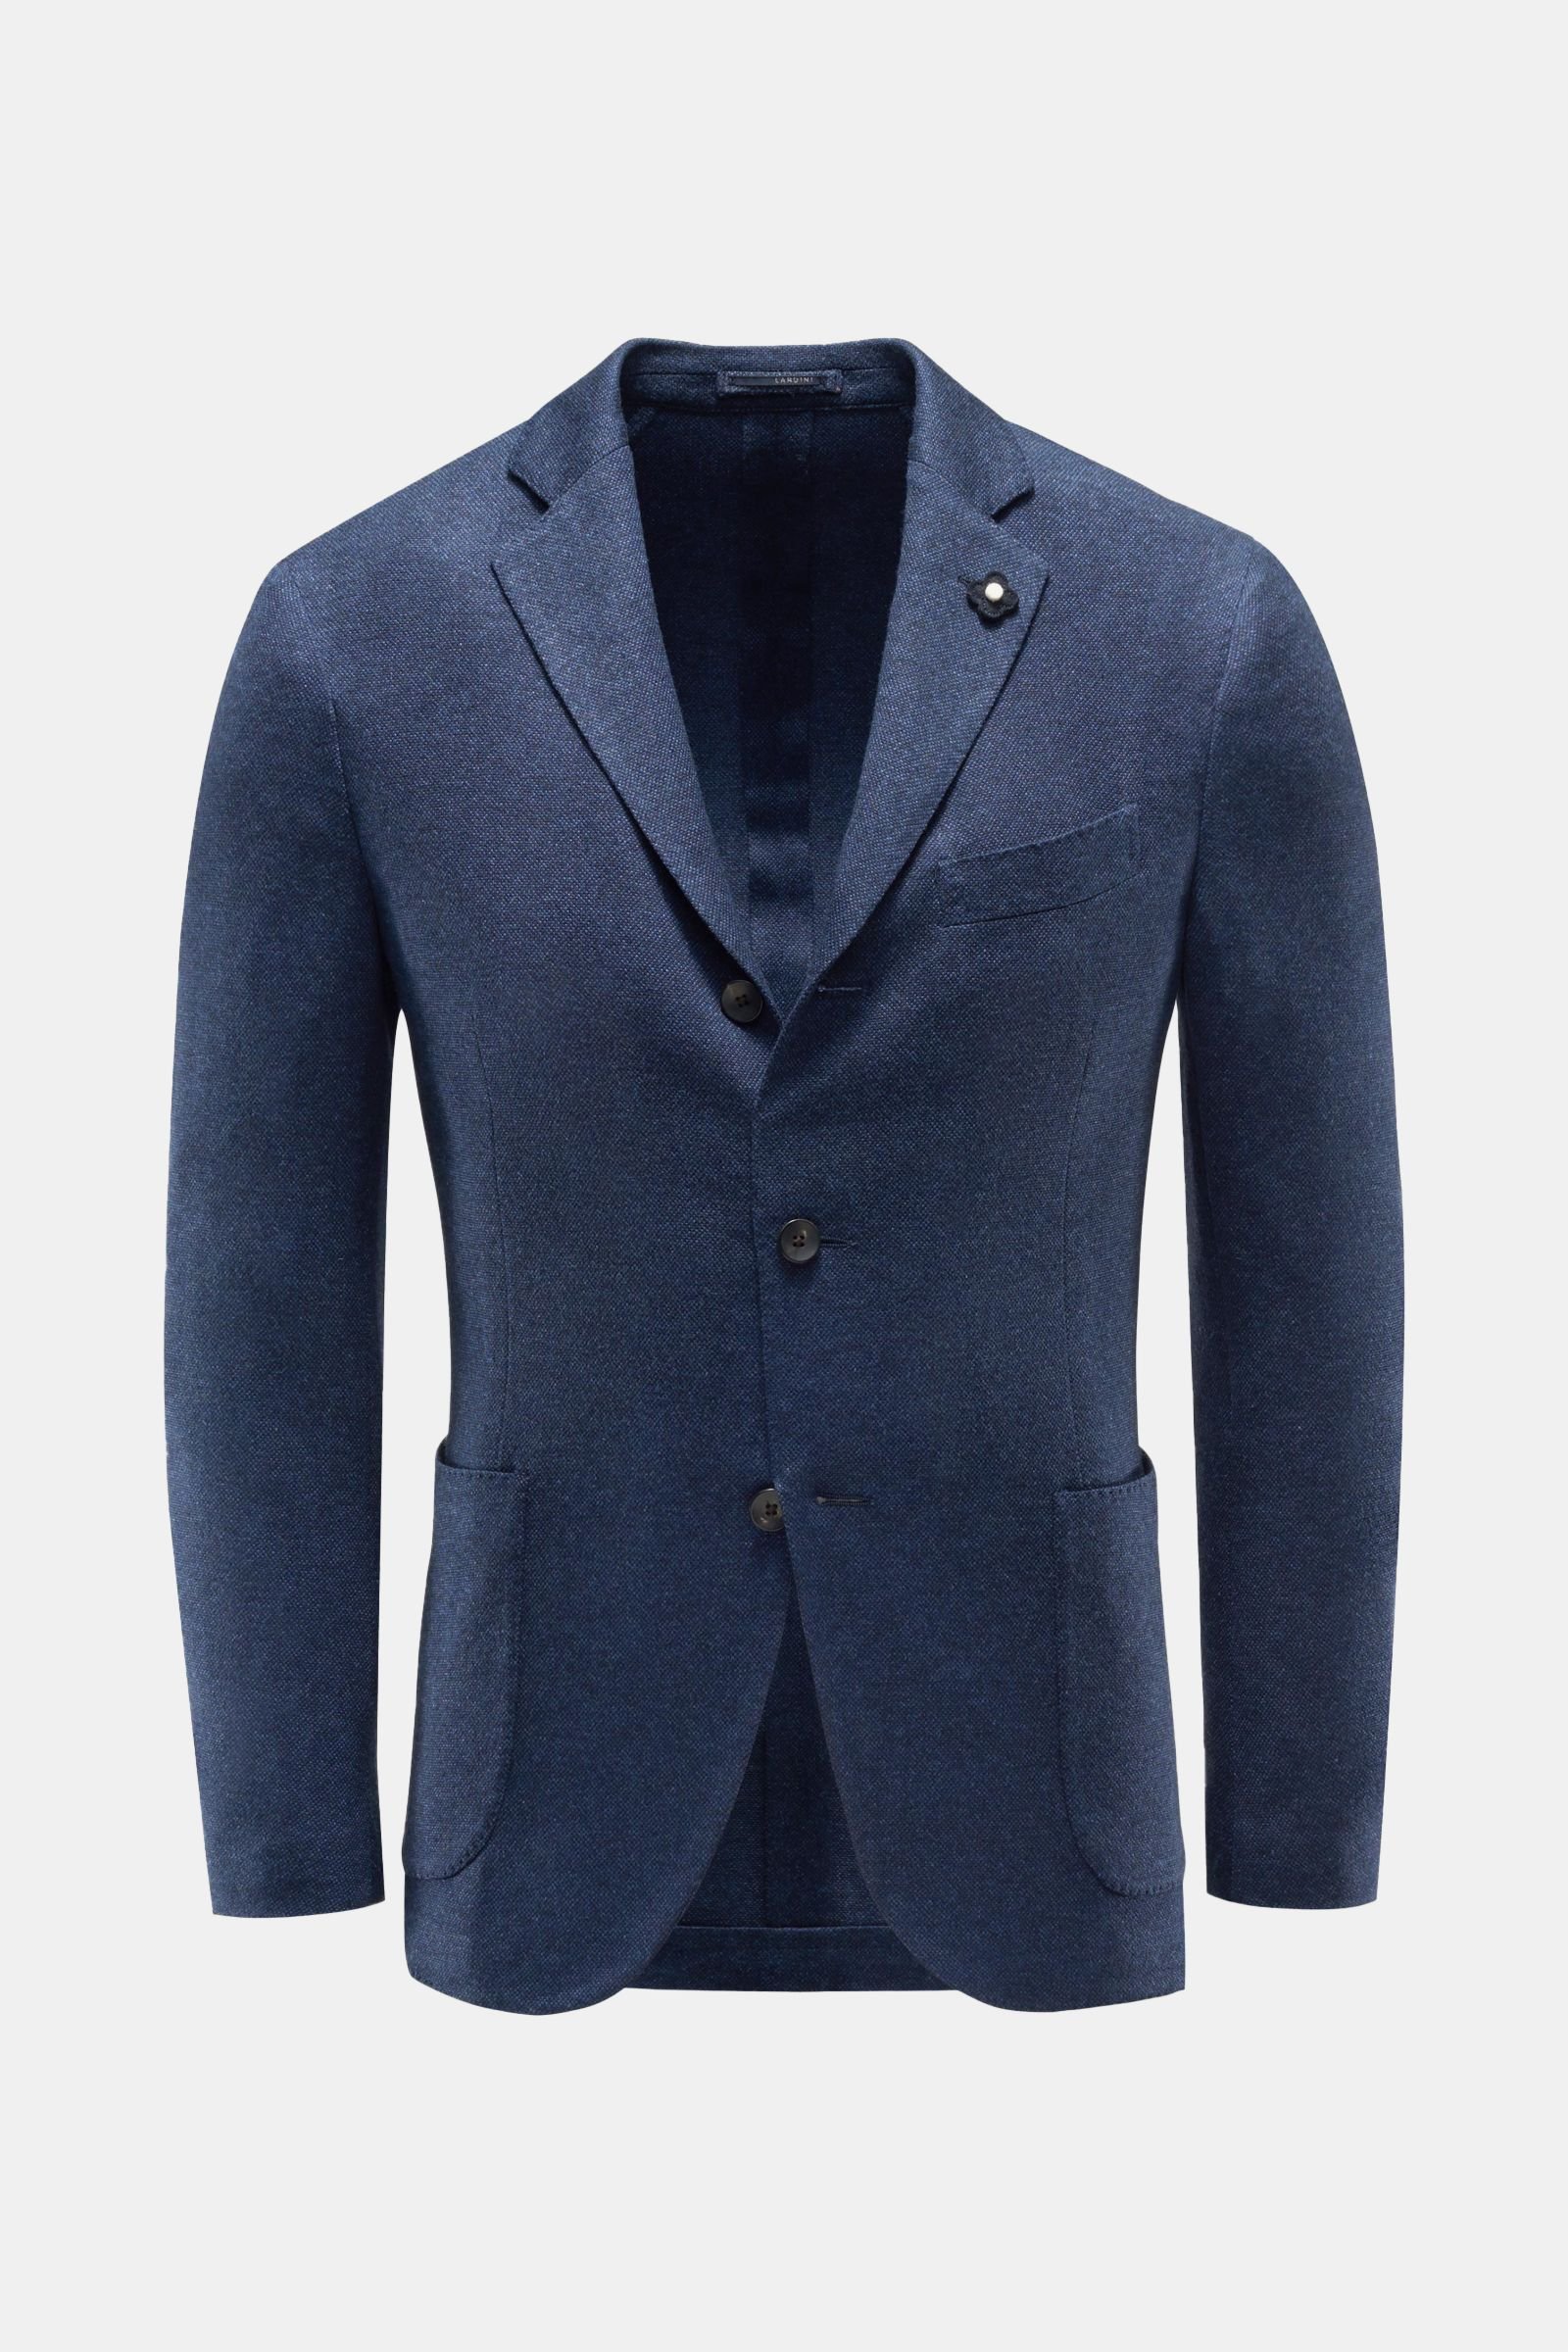 Jersey smart-casual jacket blue